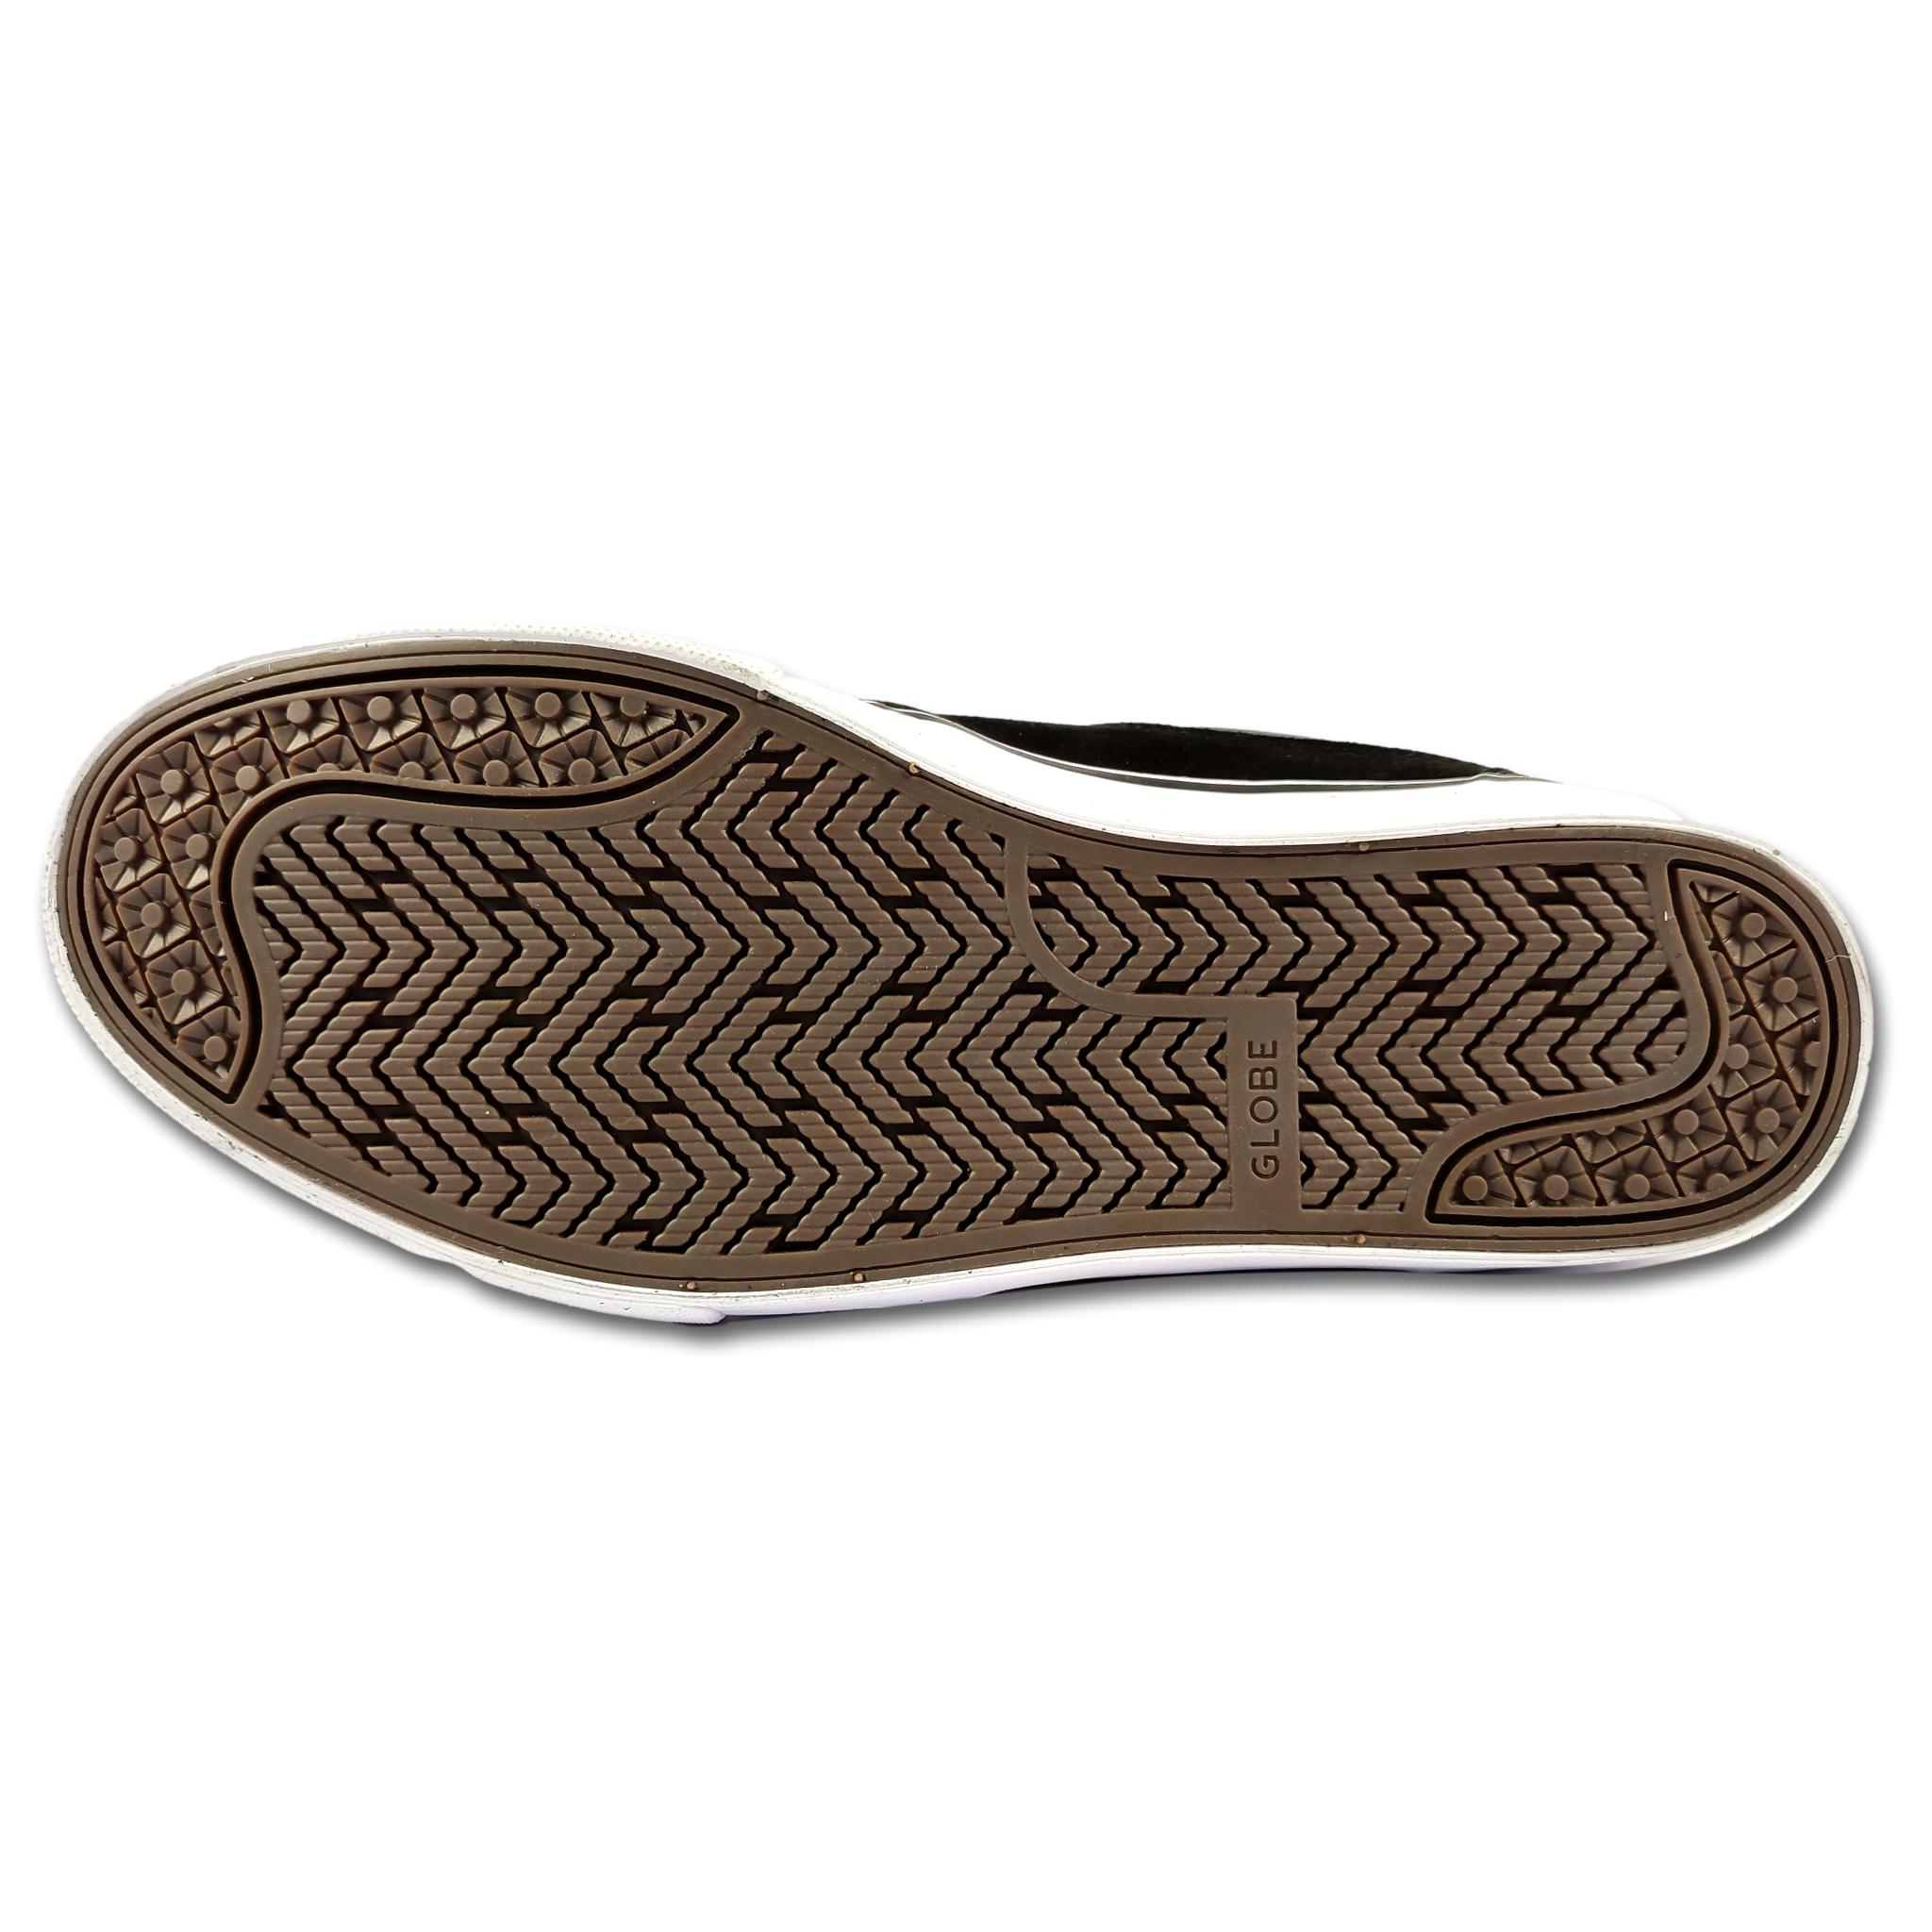 Globe shoes mahalo black white copper